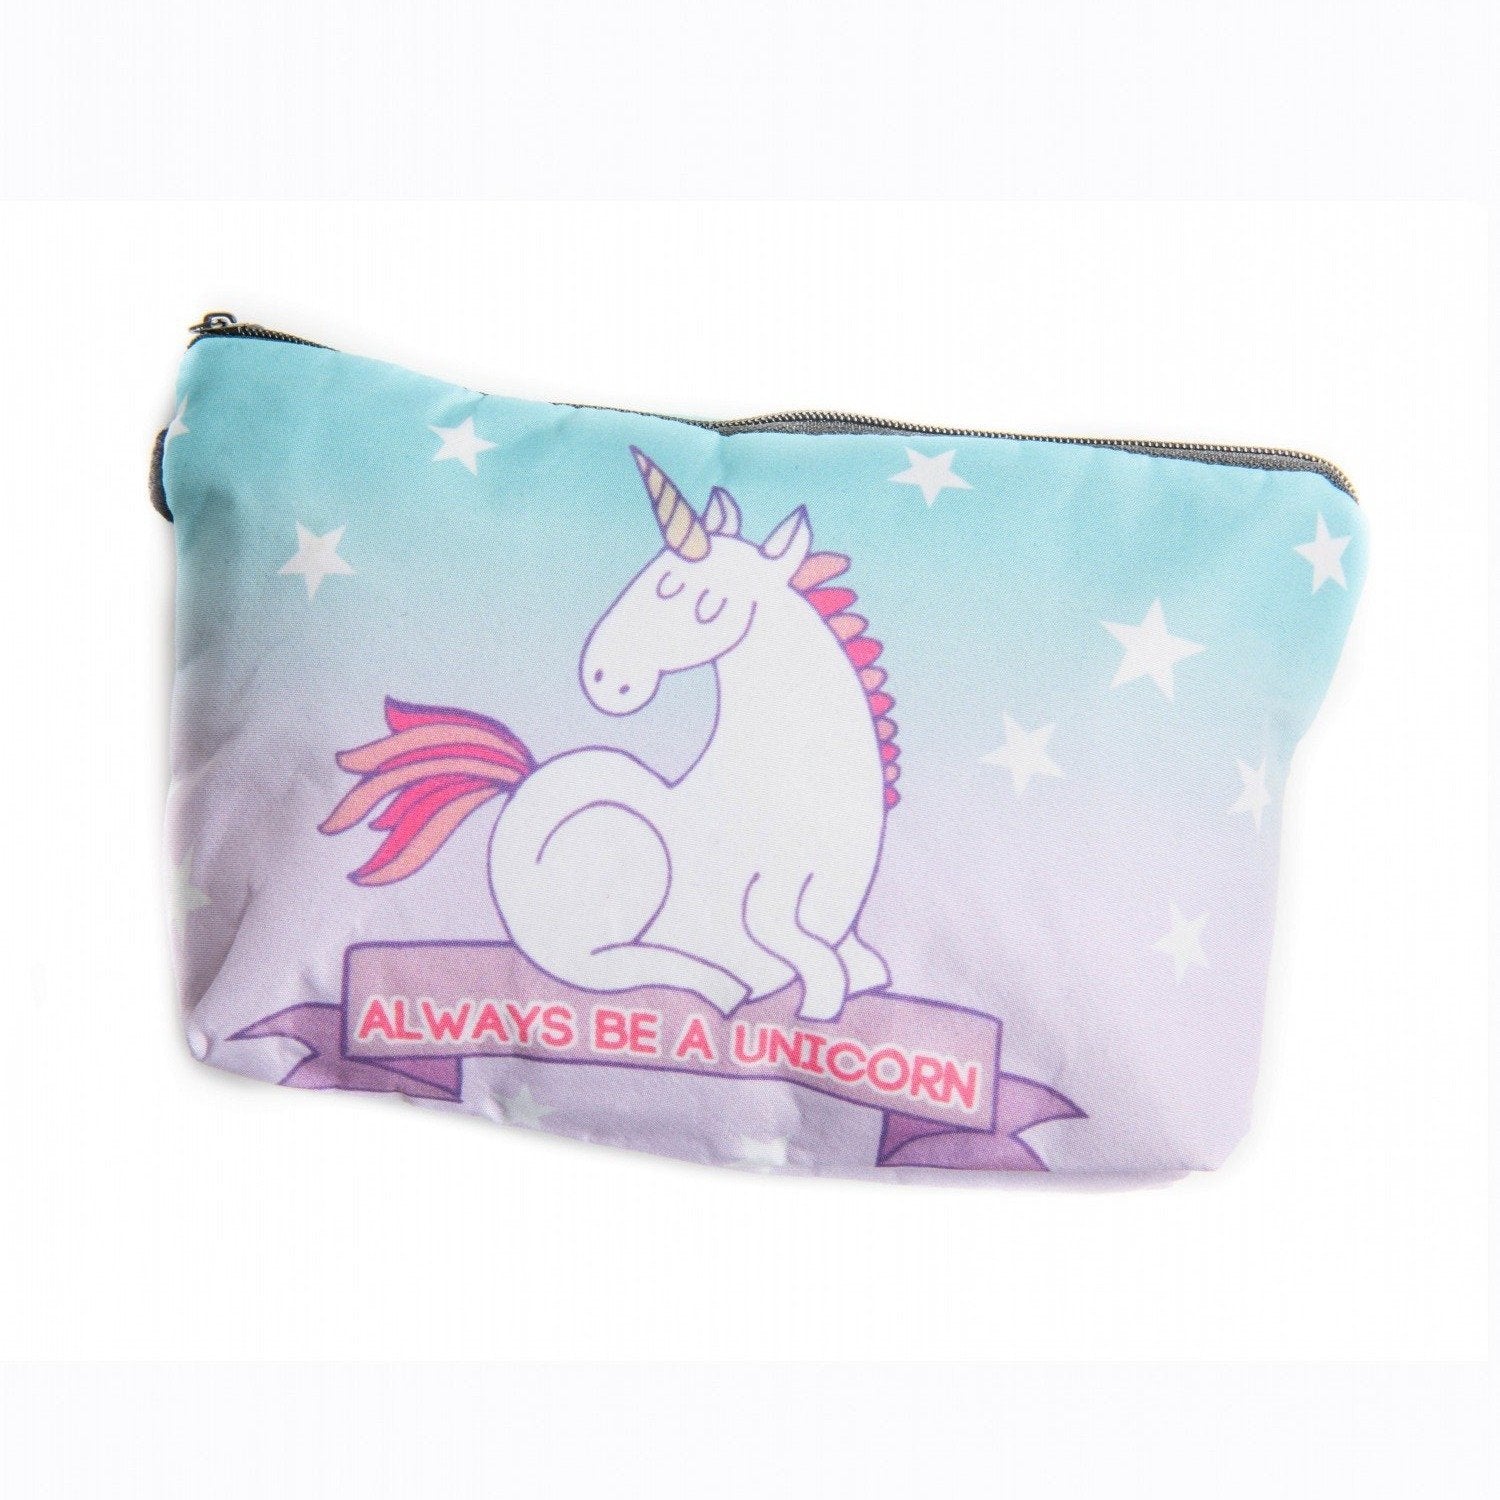 Portfard Dreamy Unicorn - Adda Gifts 